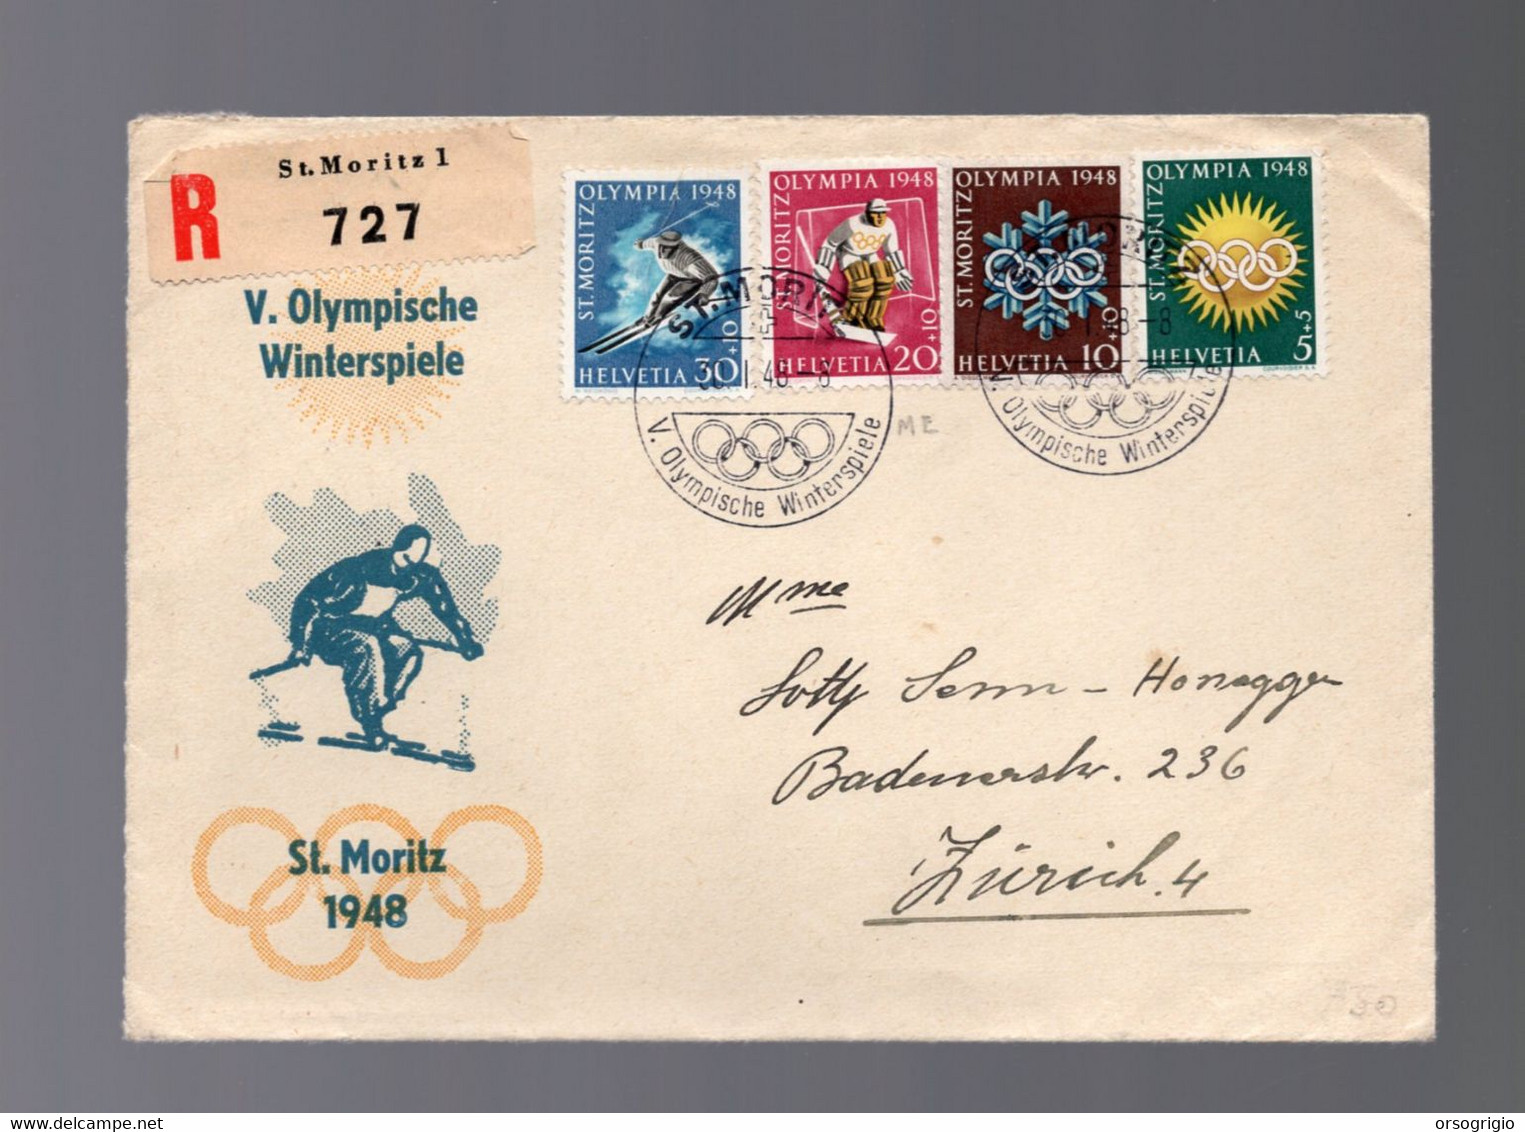 SVIZZERA - GIOCHI OLIMPICI 1948 - V. OLYMPISCHE WINTERSPIELE 30-1-1948  -   LUXE - Winter 1948: St. Moritz